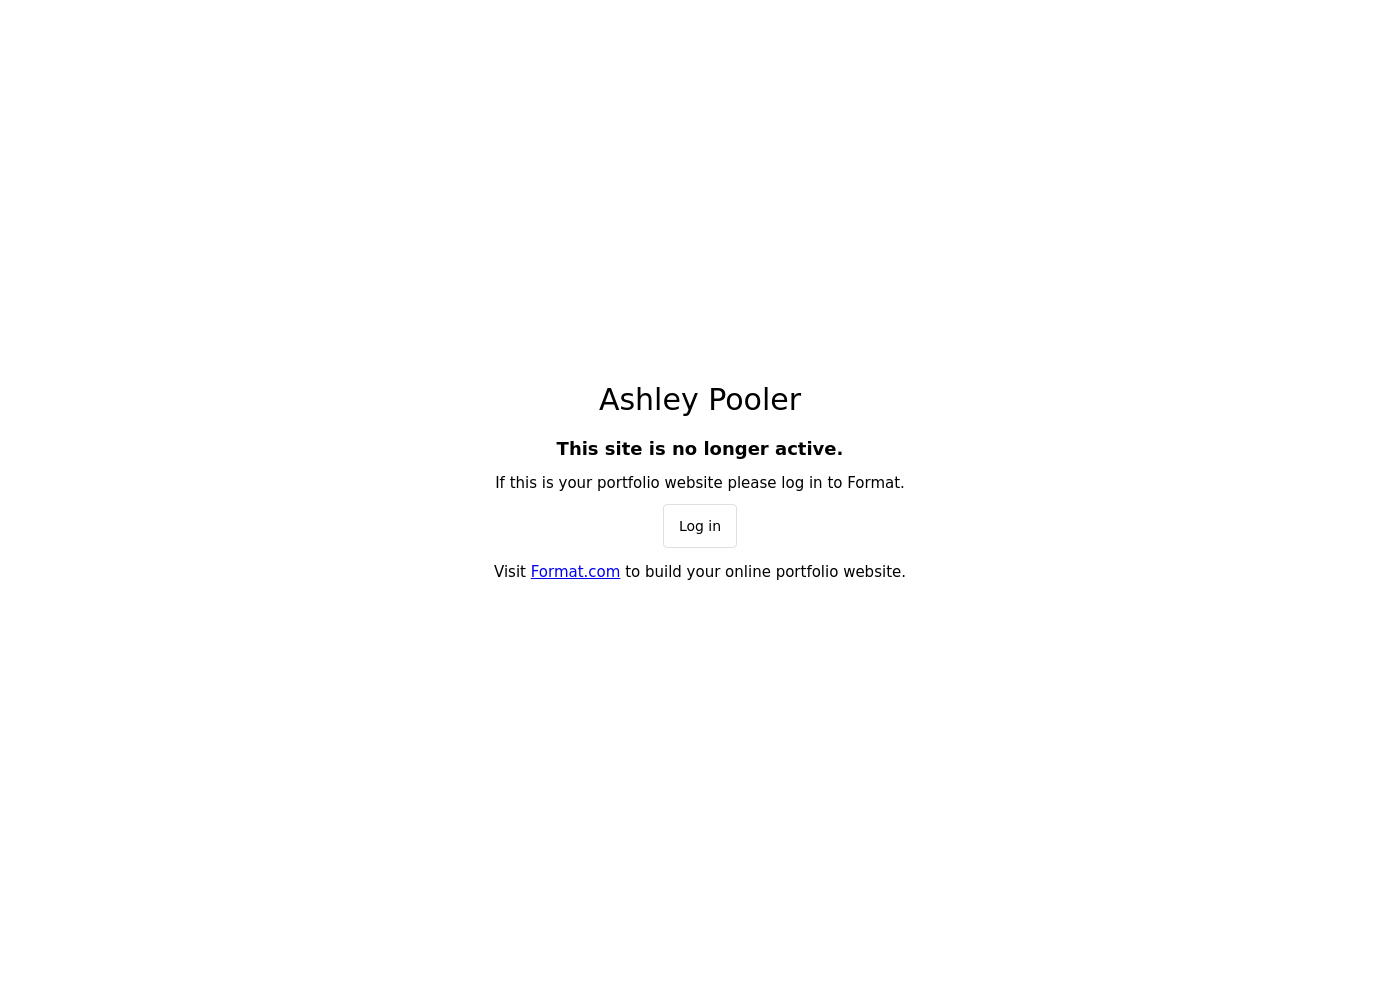 Ashley Pooler desktop